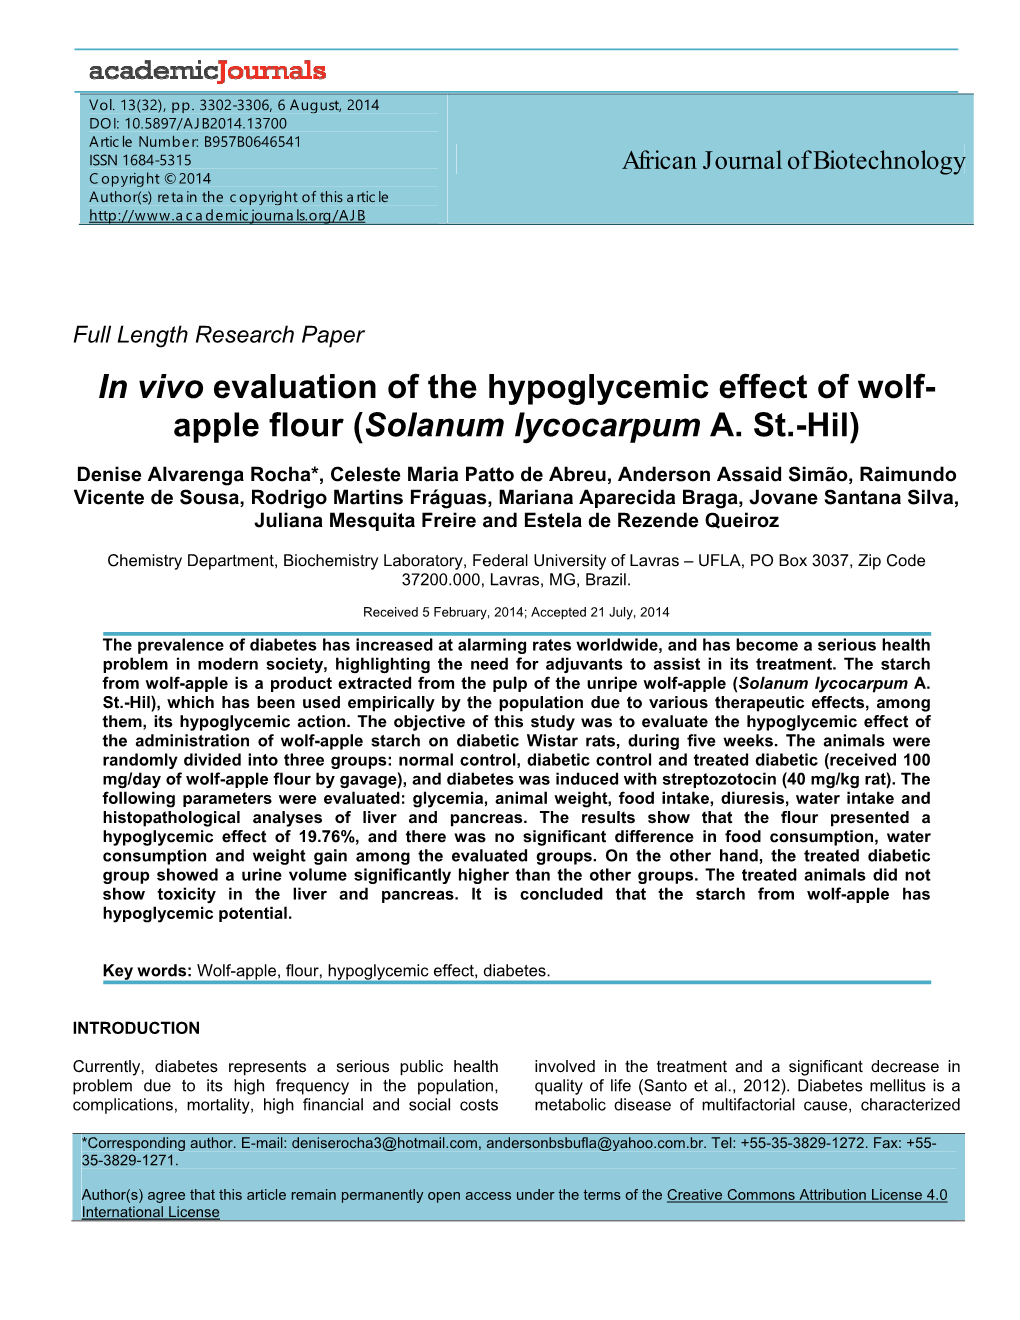 In Vivo Evaluation of the Hypoglycemic Effect of Wolf- Apple Flour (Solanum Lycocarpum A